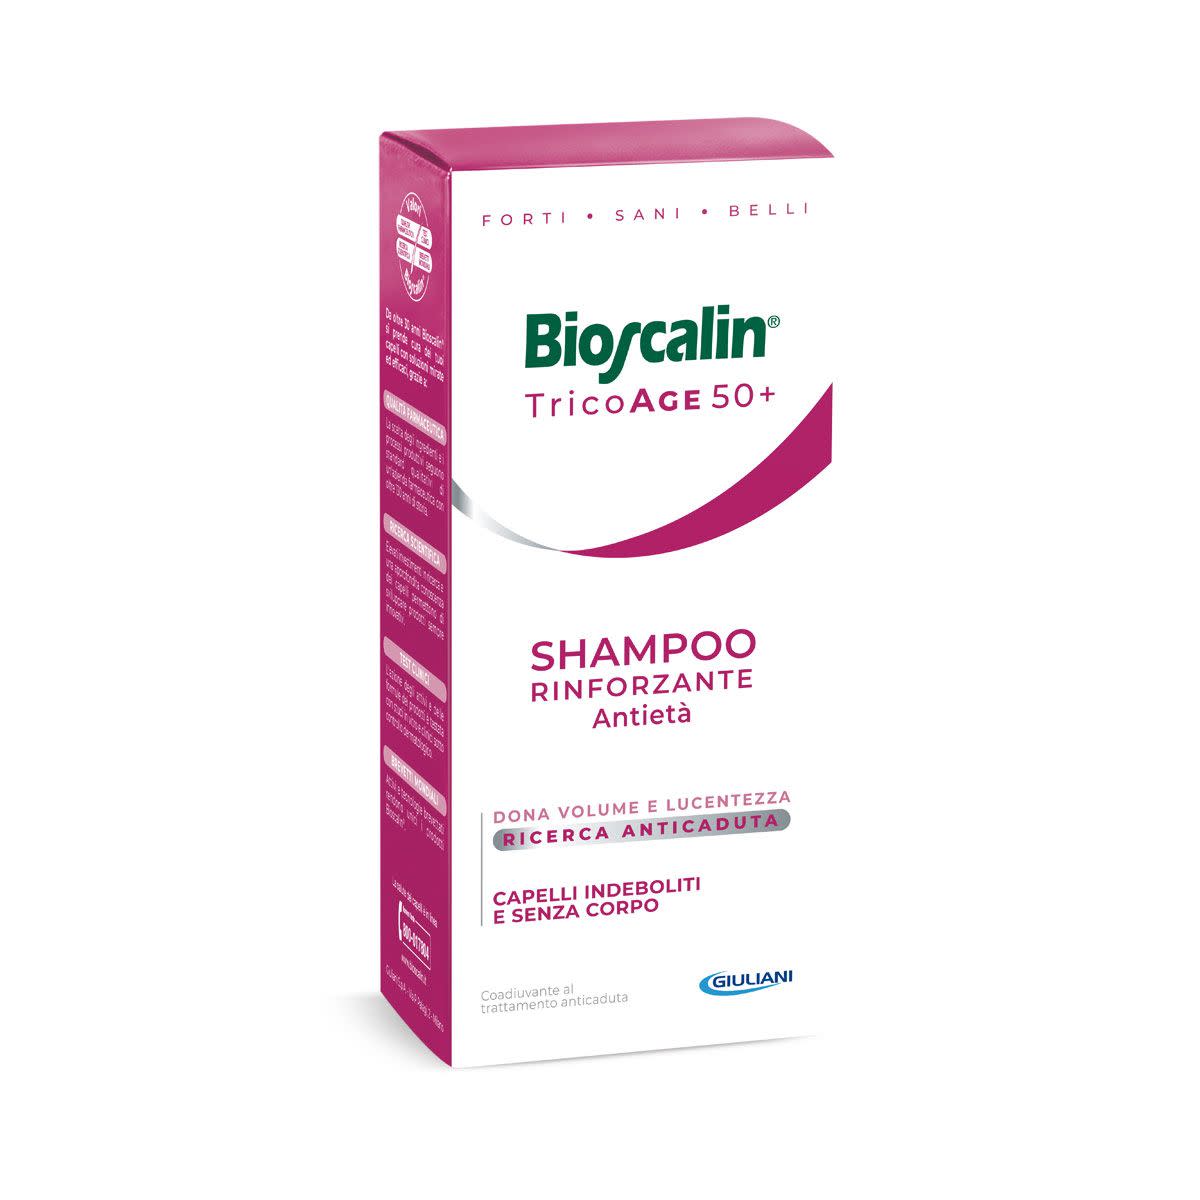 923785620 - Bioscalin Tricoage 50+ Shampoo 200ml - 7864490_3.jpg